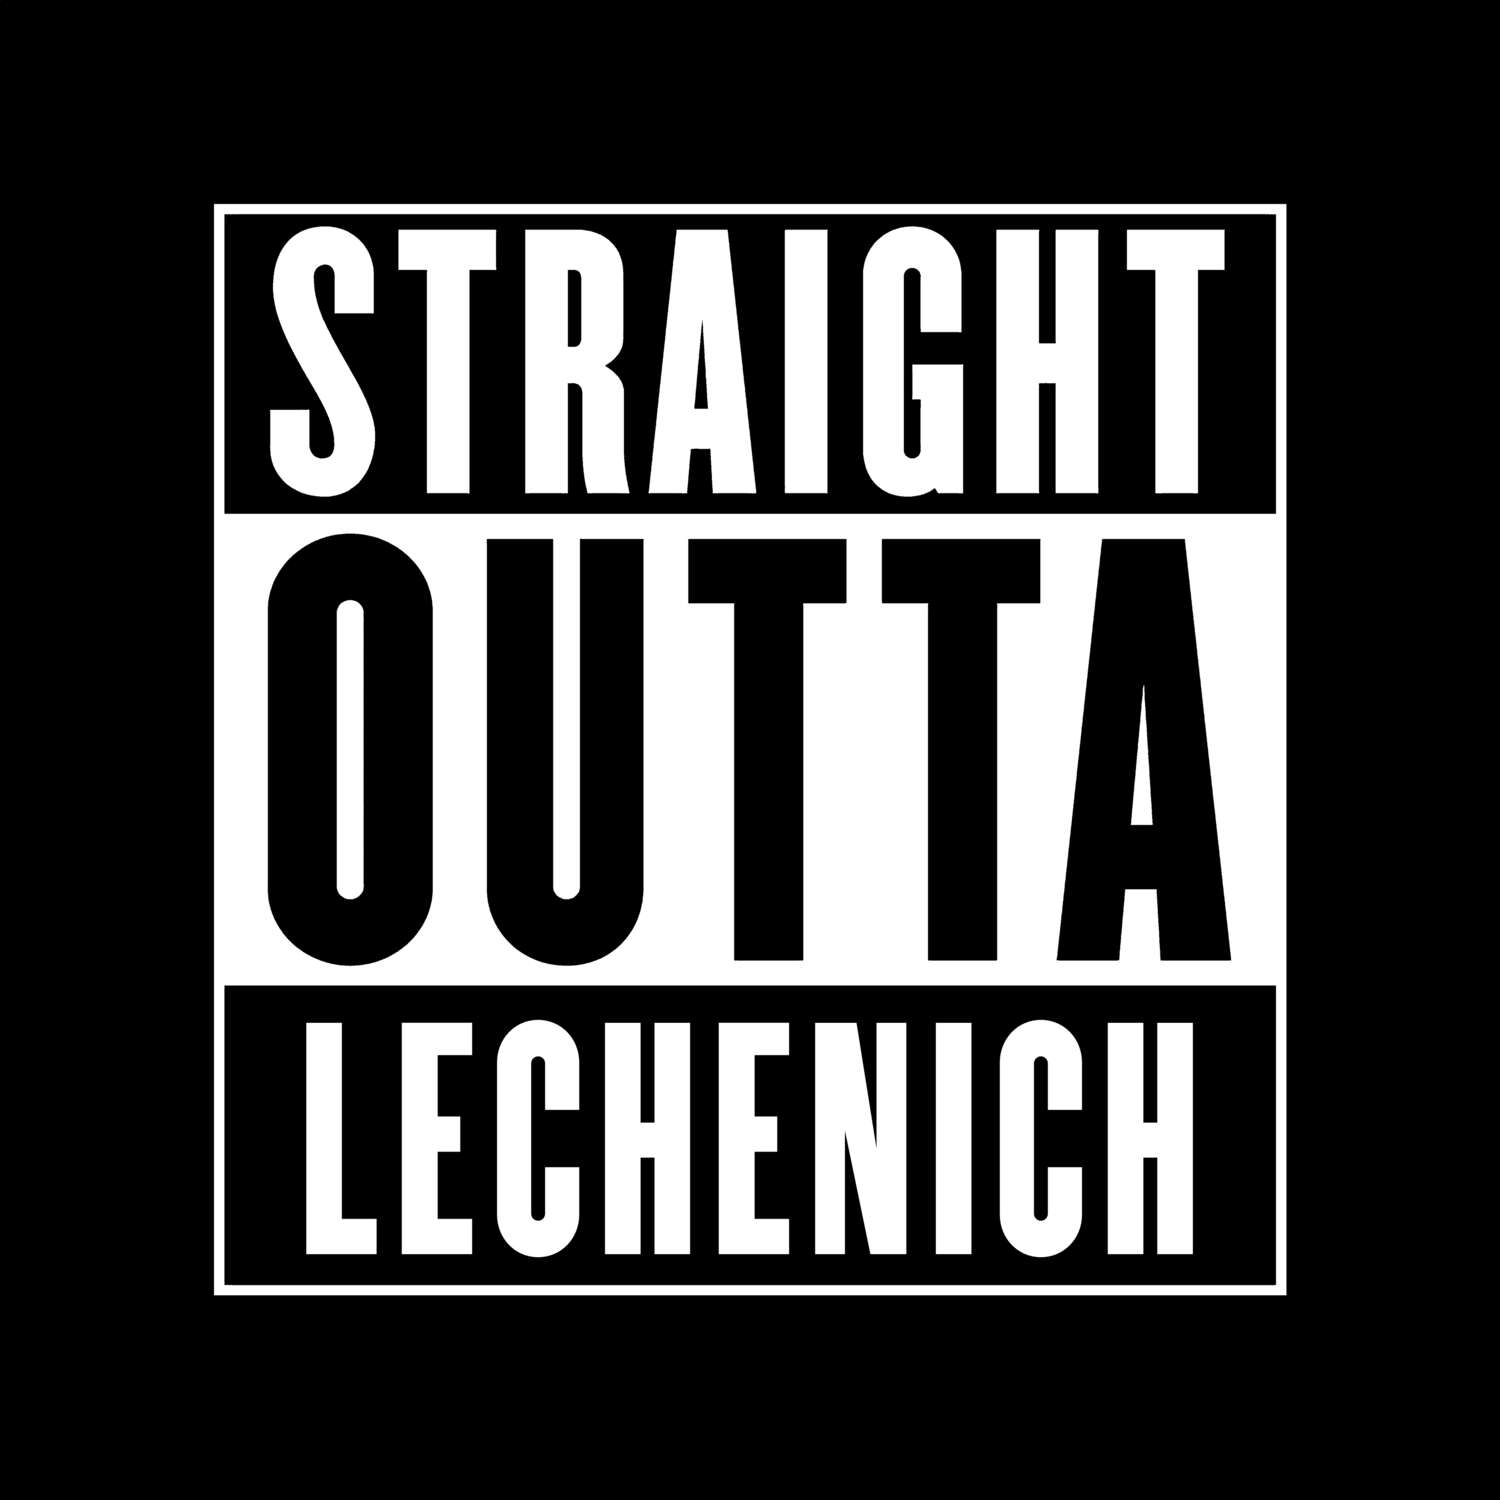 Lechenich T-Shirt »Straight Outta«